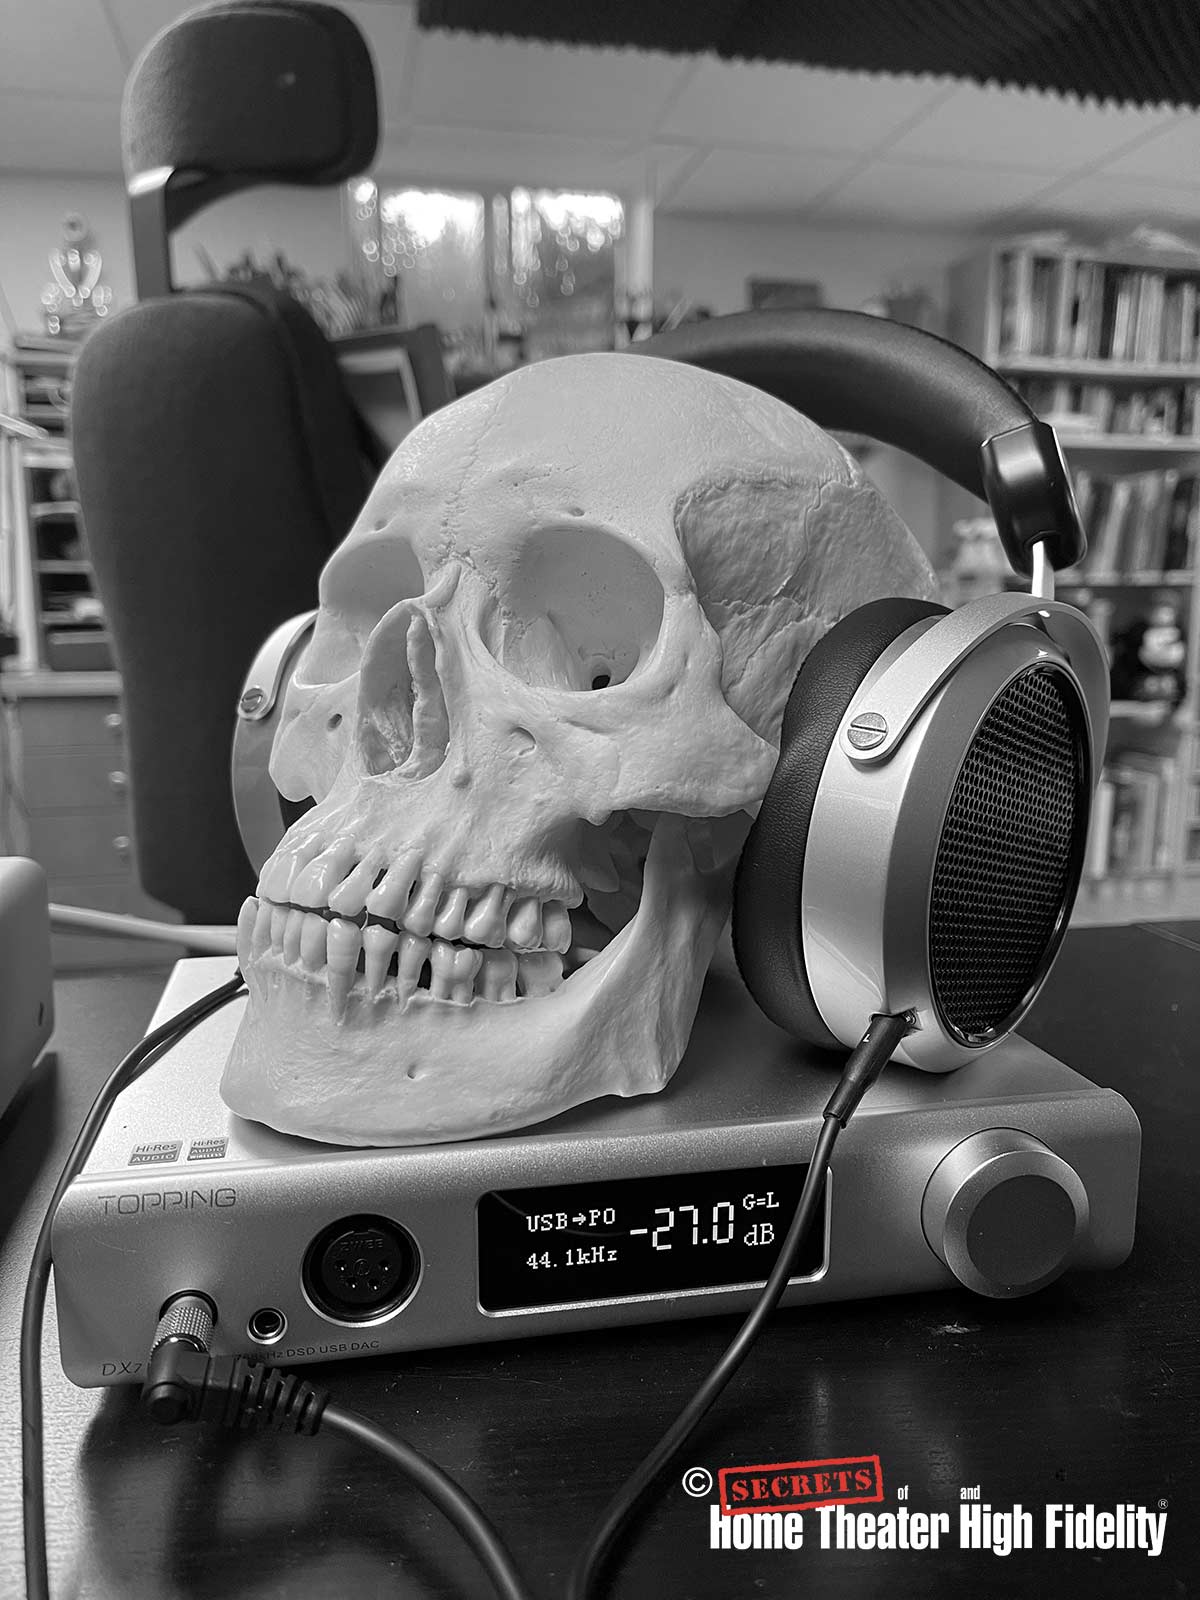 HIFIMAN HE400se Planar Magnetic Headphones on a skull